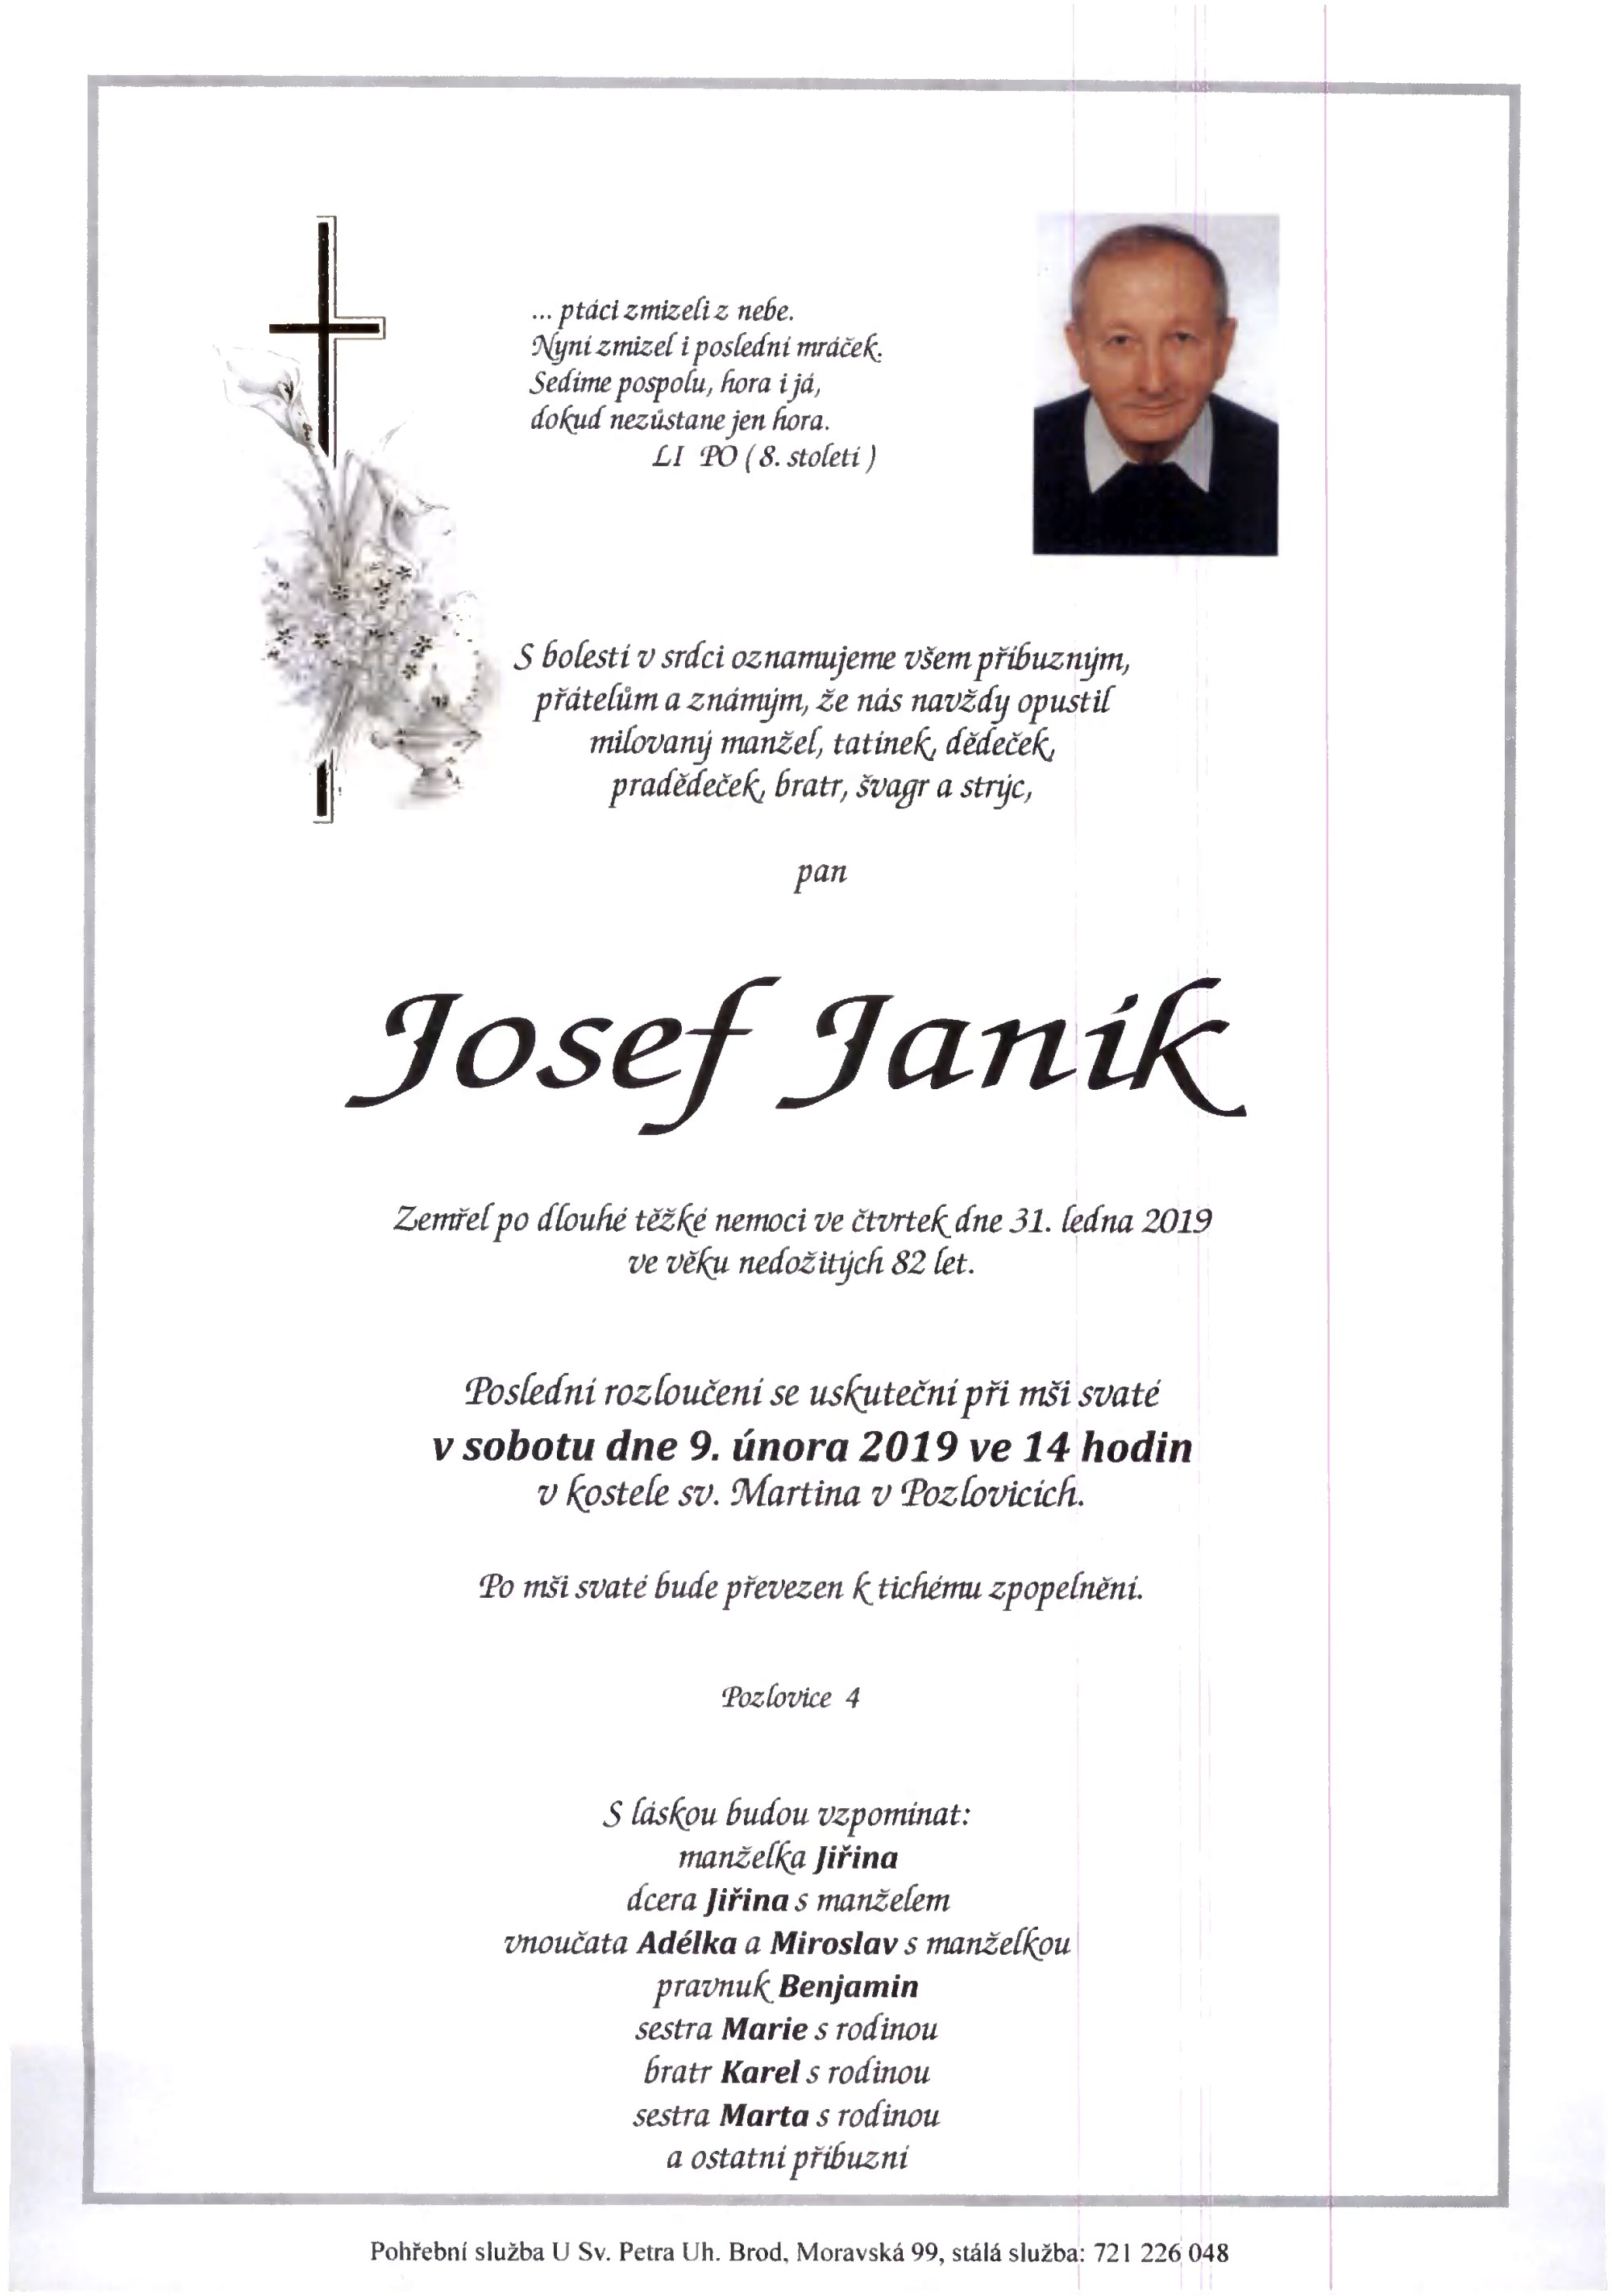 Josef Janík